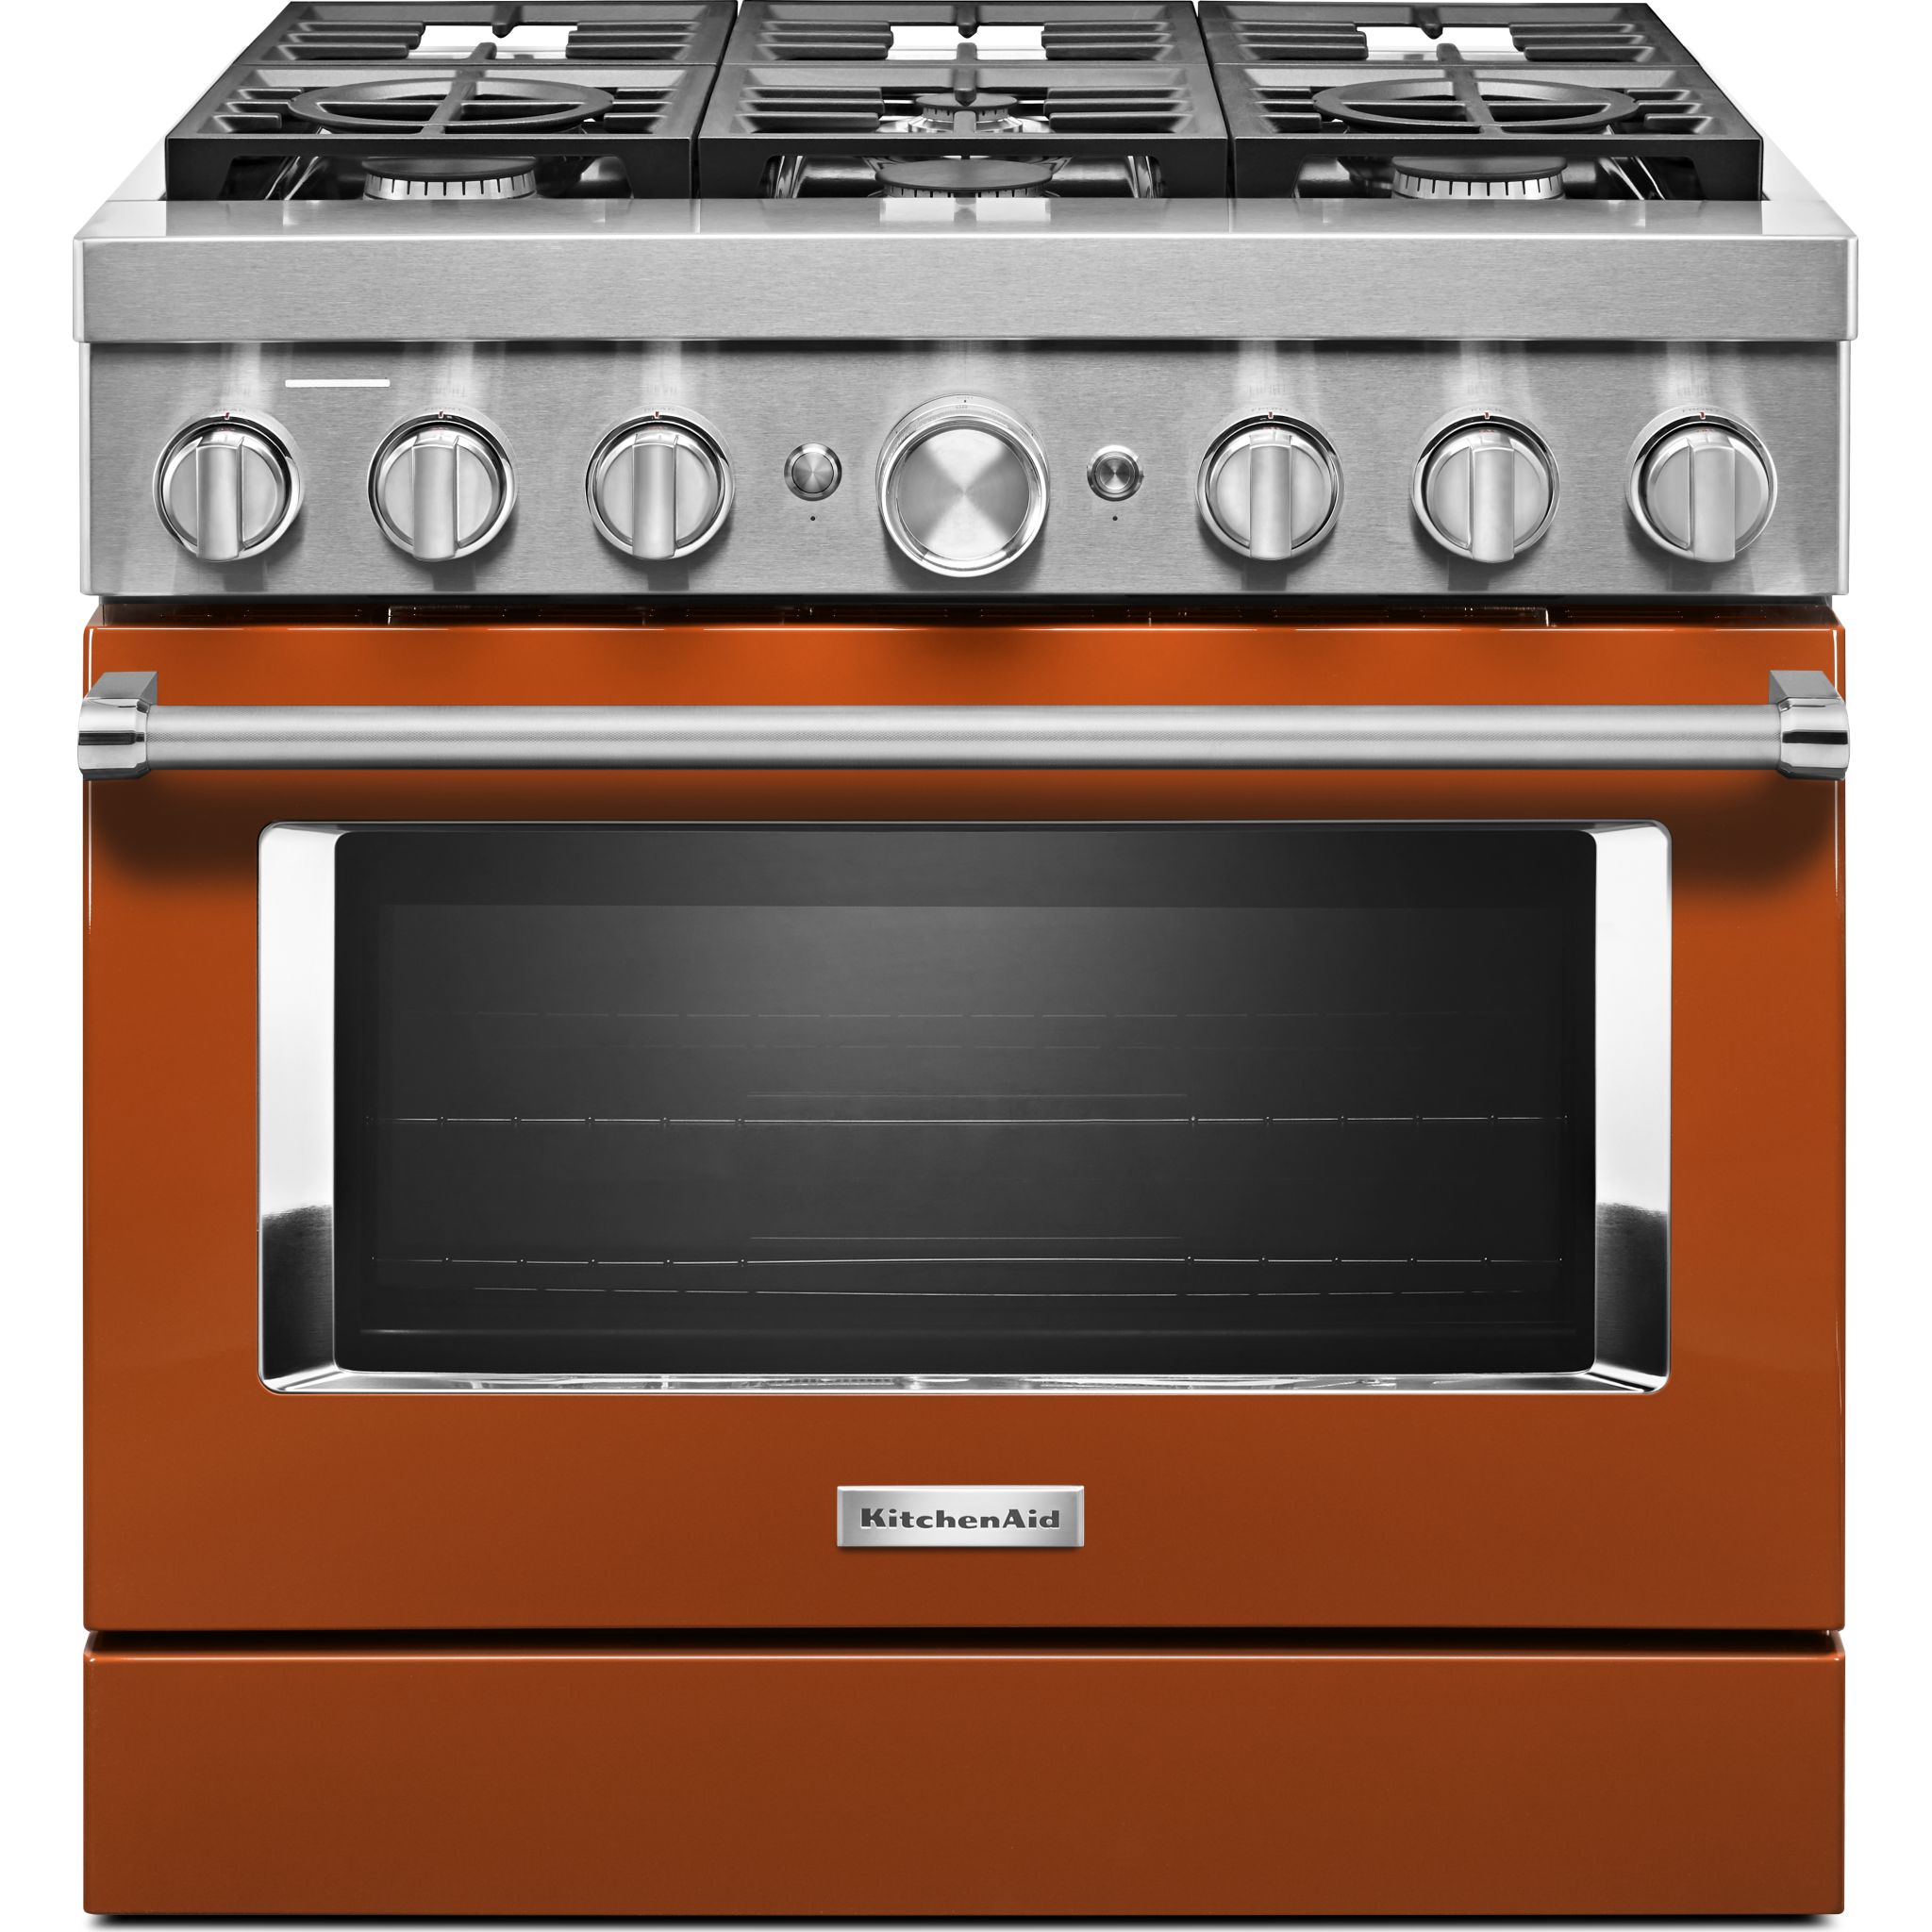 Kitchenaid Dual Fuel Range (Kfdc506jsc) In Scorched Orange, Size: 34"-38" W